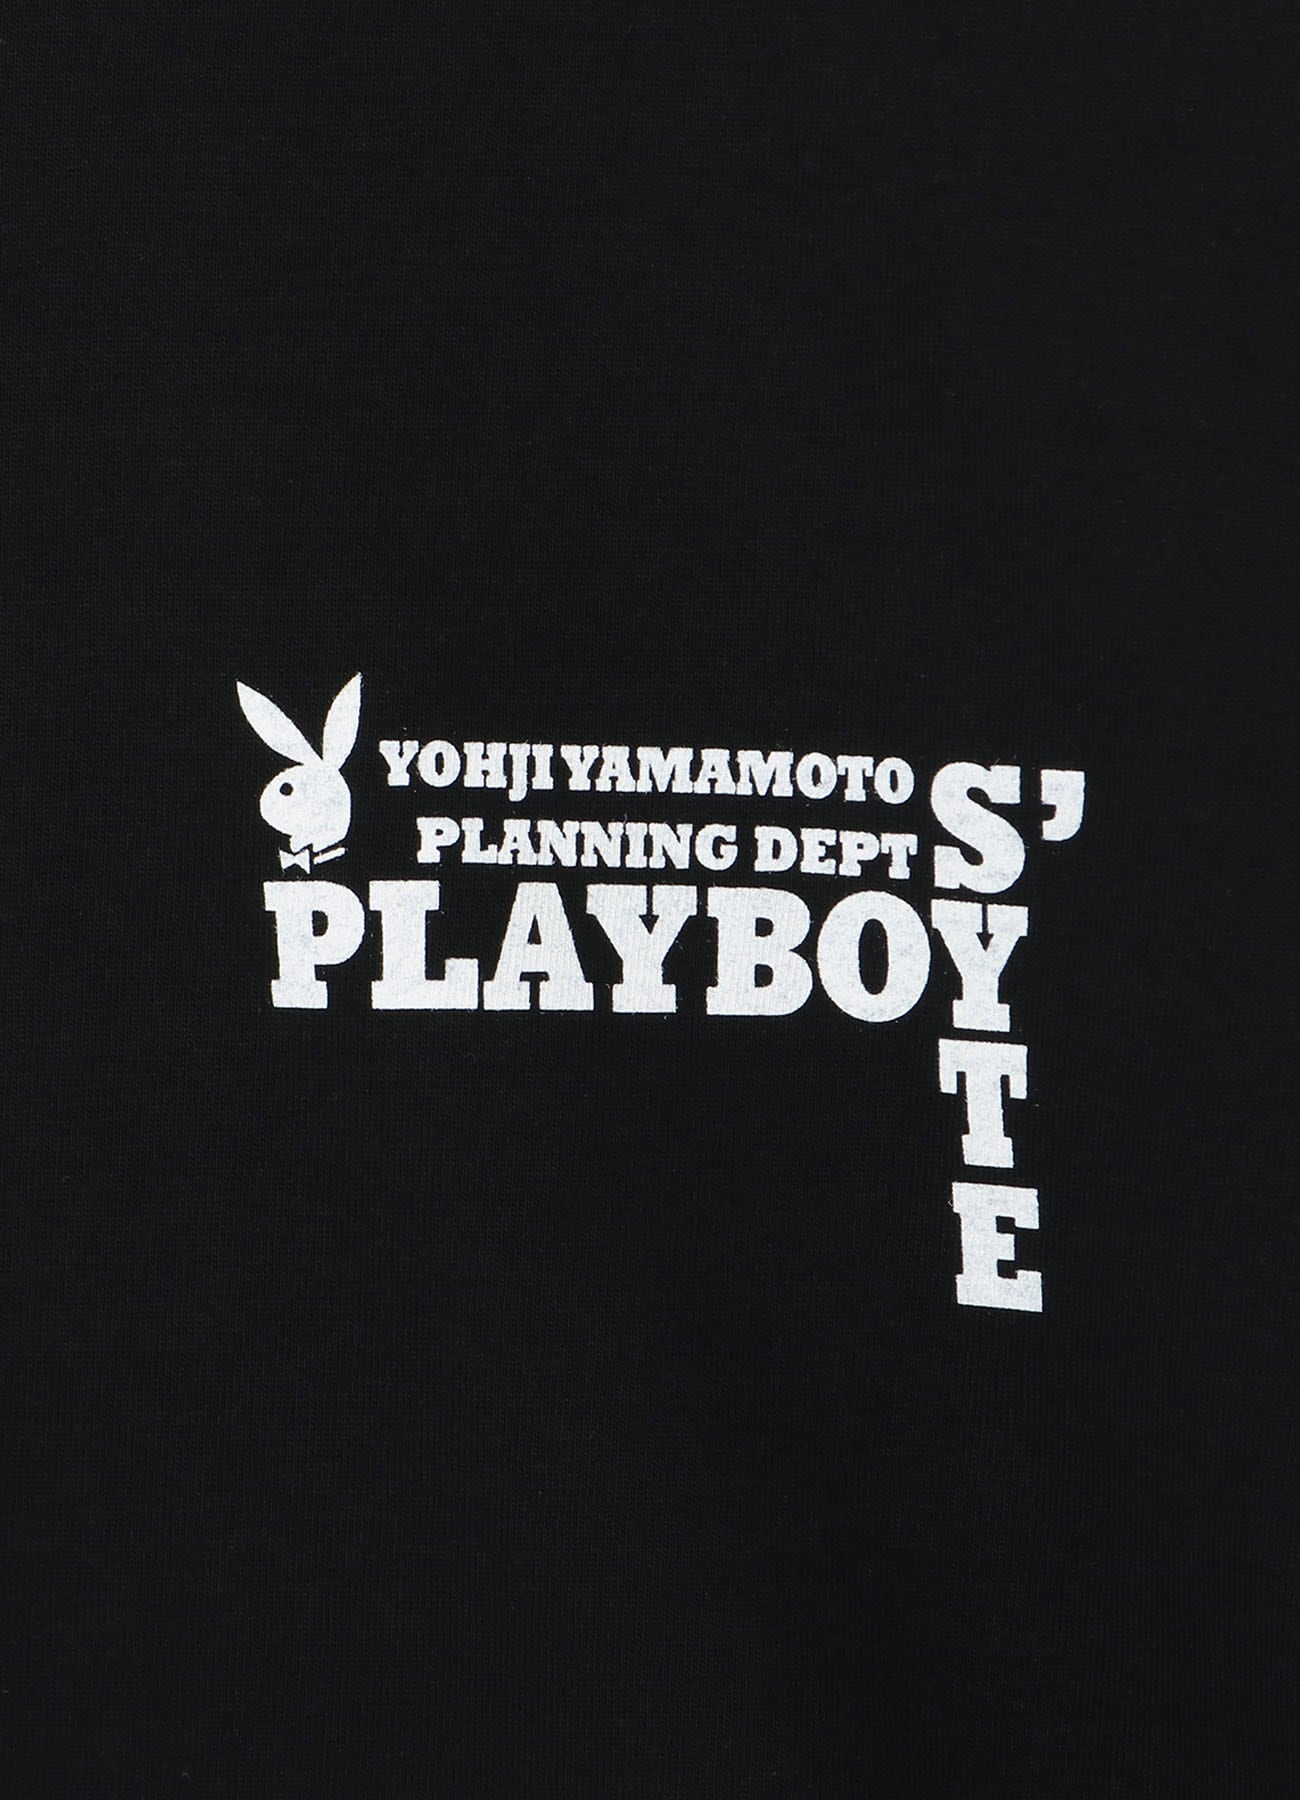 PLAYBOY×S’YTE feat Harumi Yamaguchi physical T-shirt